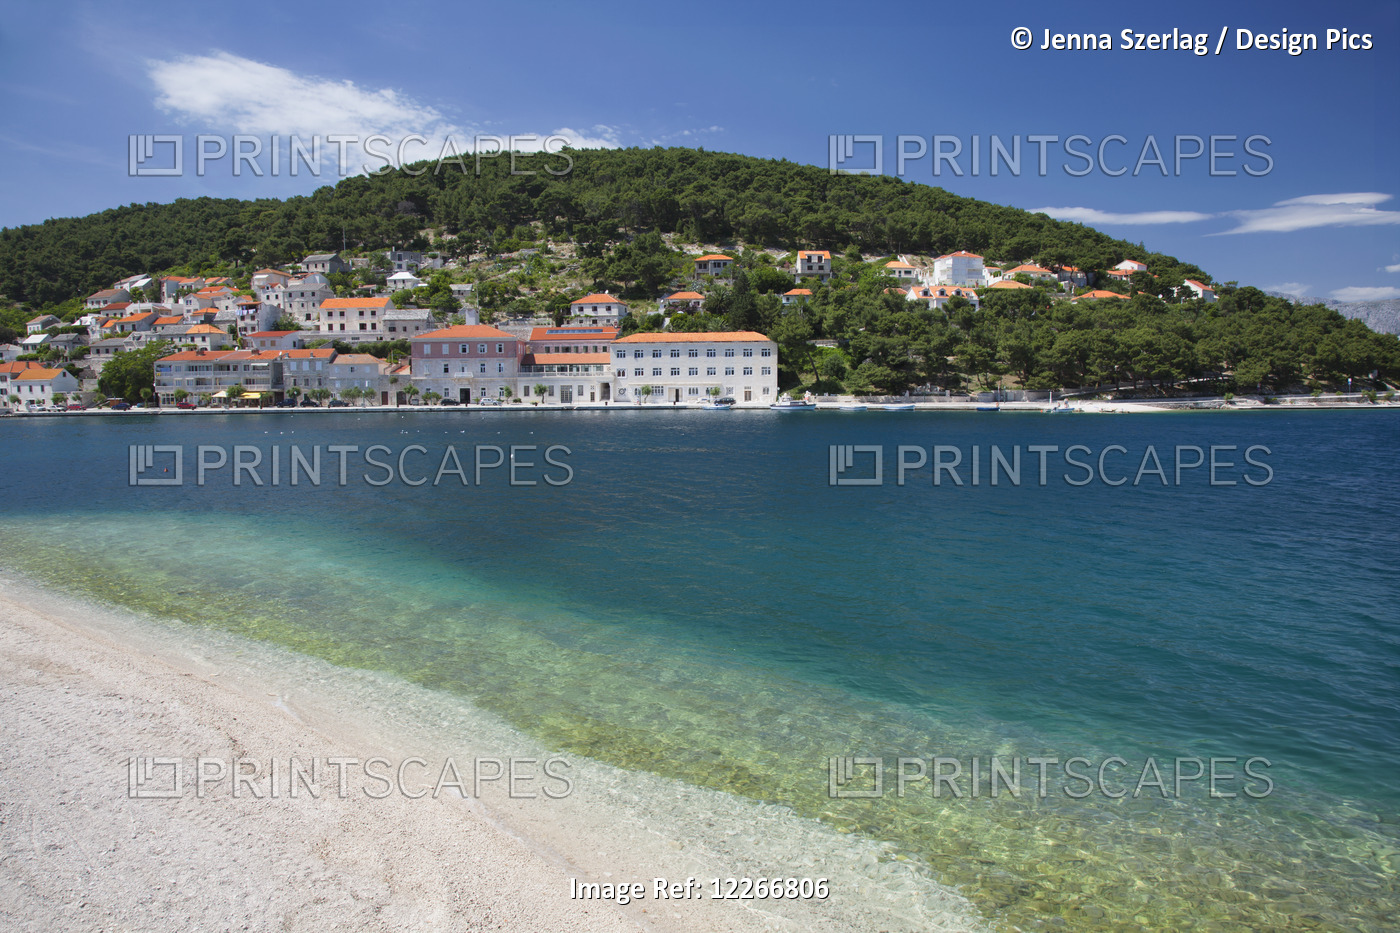 A Sunny Beach; Pucisca, Island Of Brac, Croatia